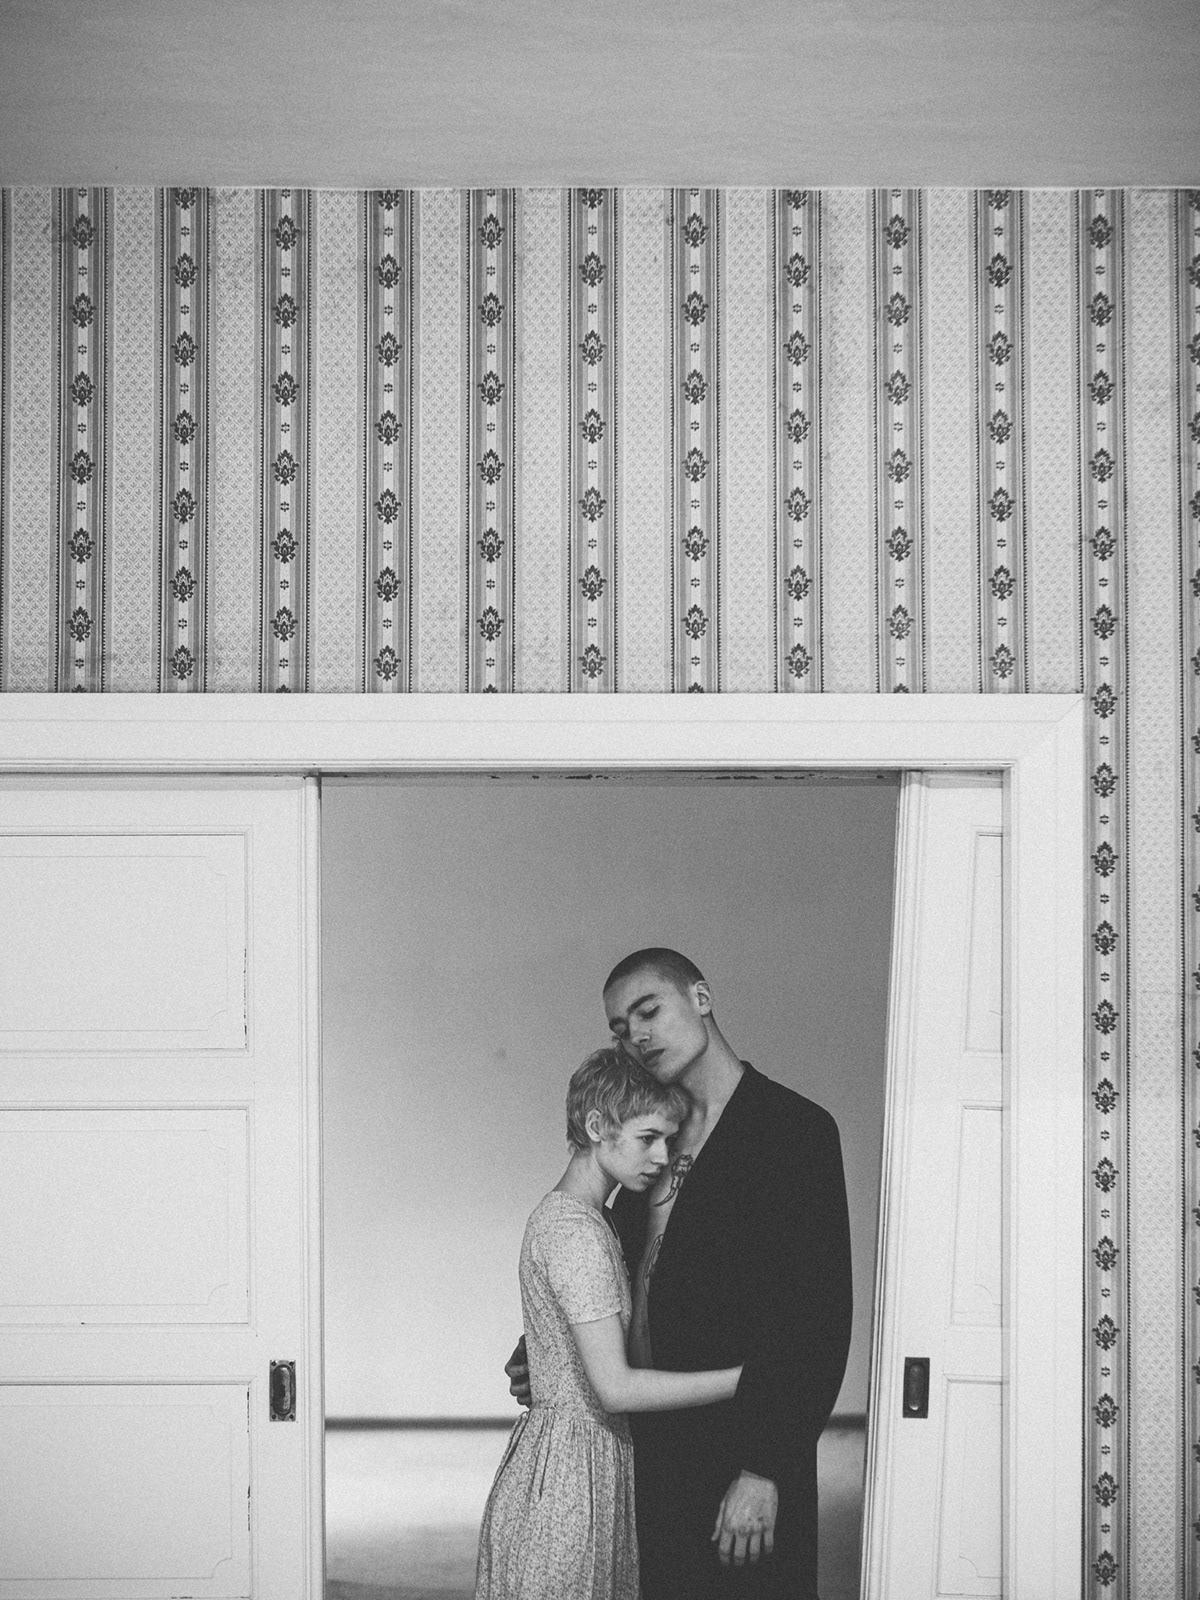 portrait Fashion  couple black and white editorial bnw Photography  analog film photography photoshoot